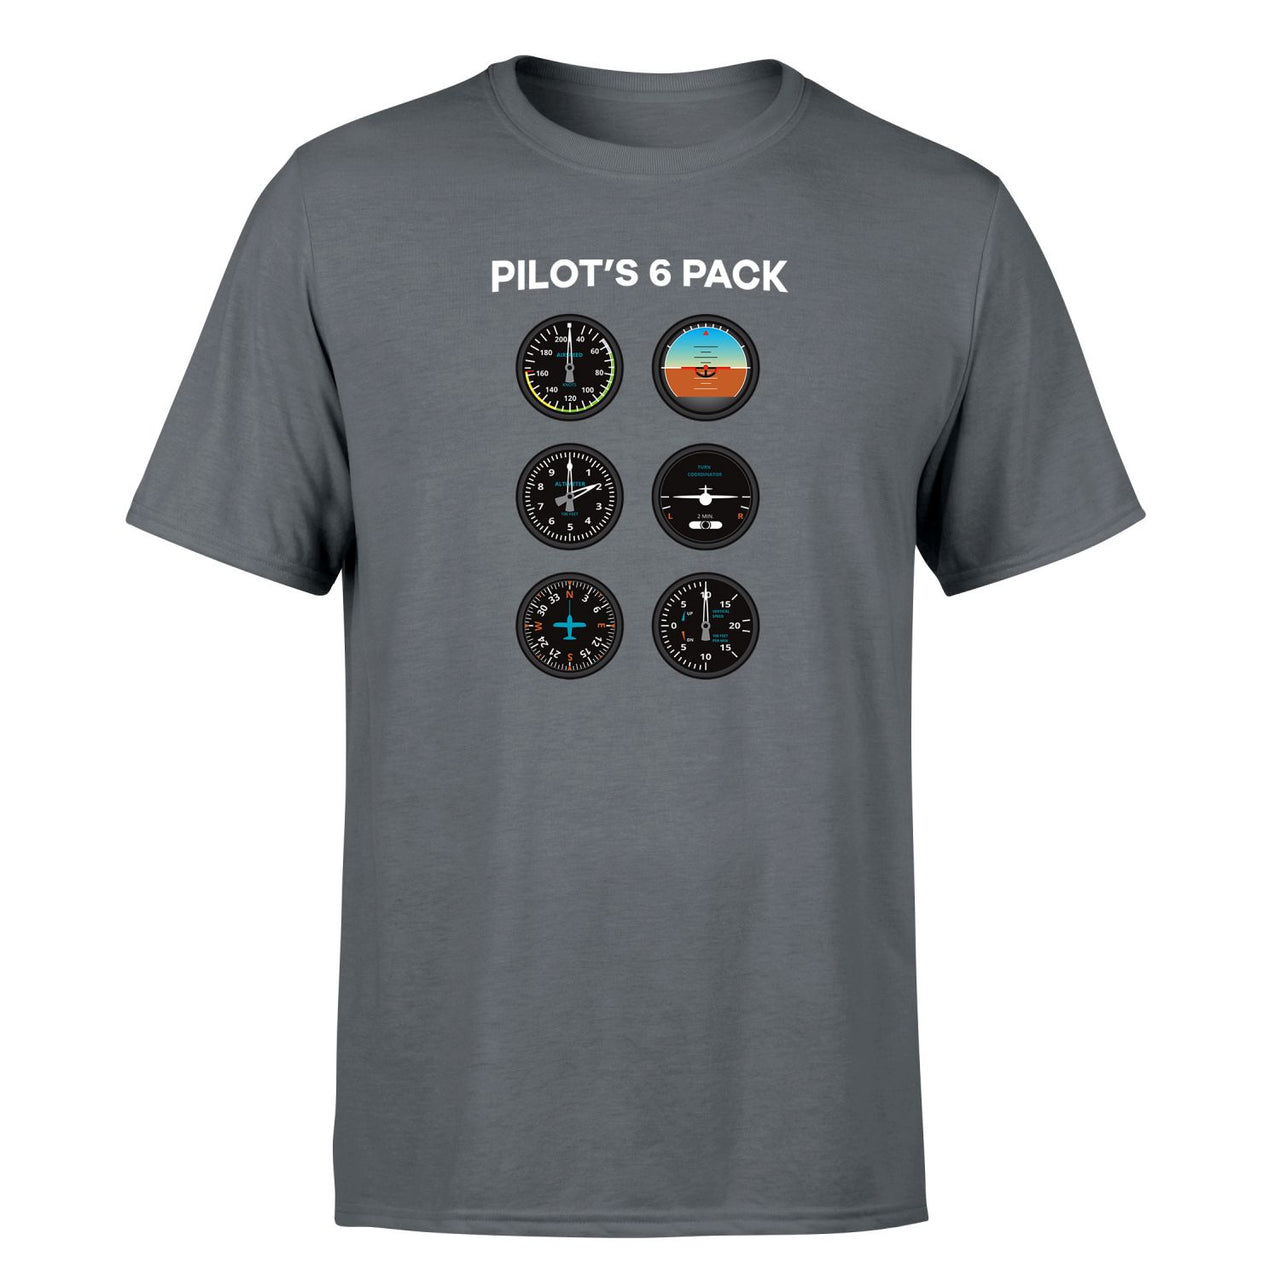 Pilot's 6 Pack Designed T-Shirts